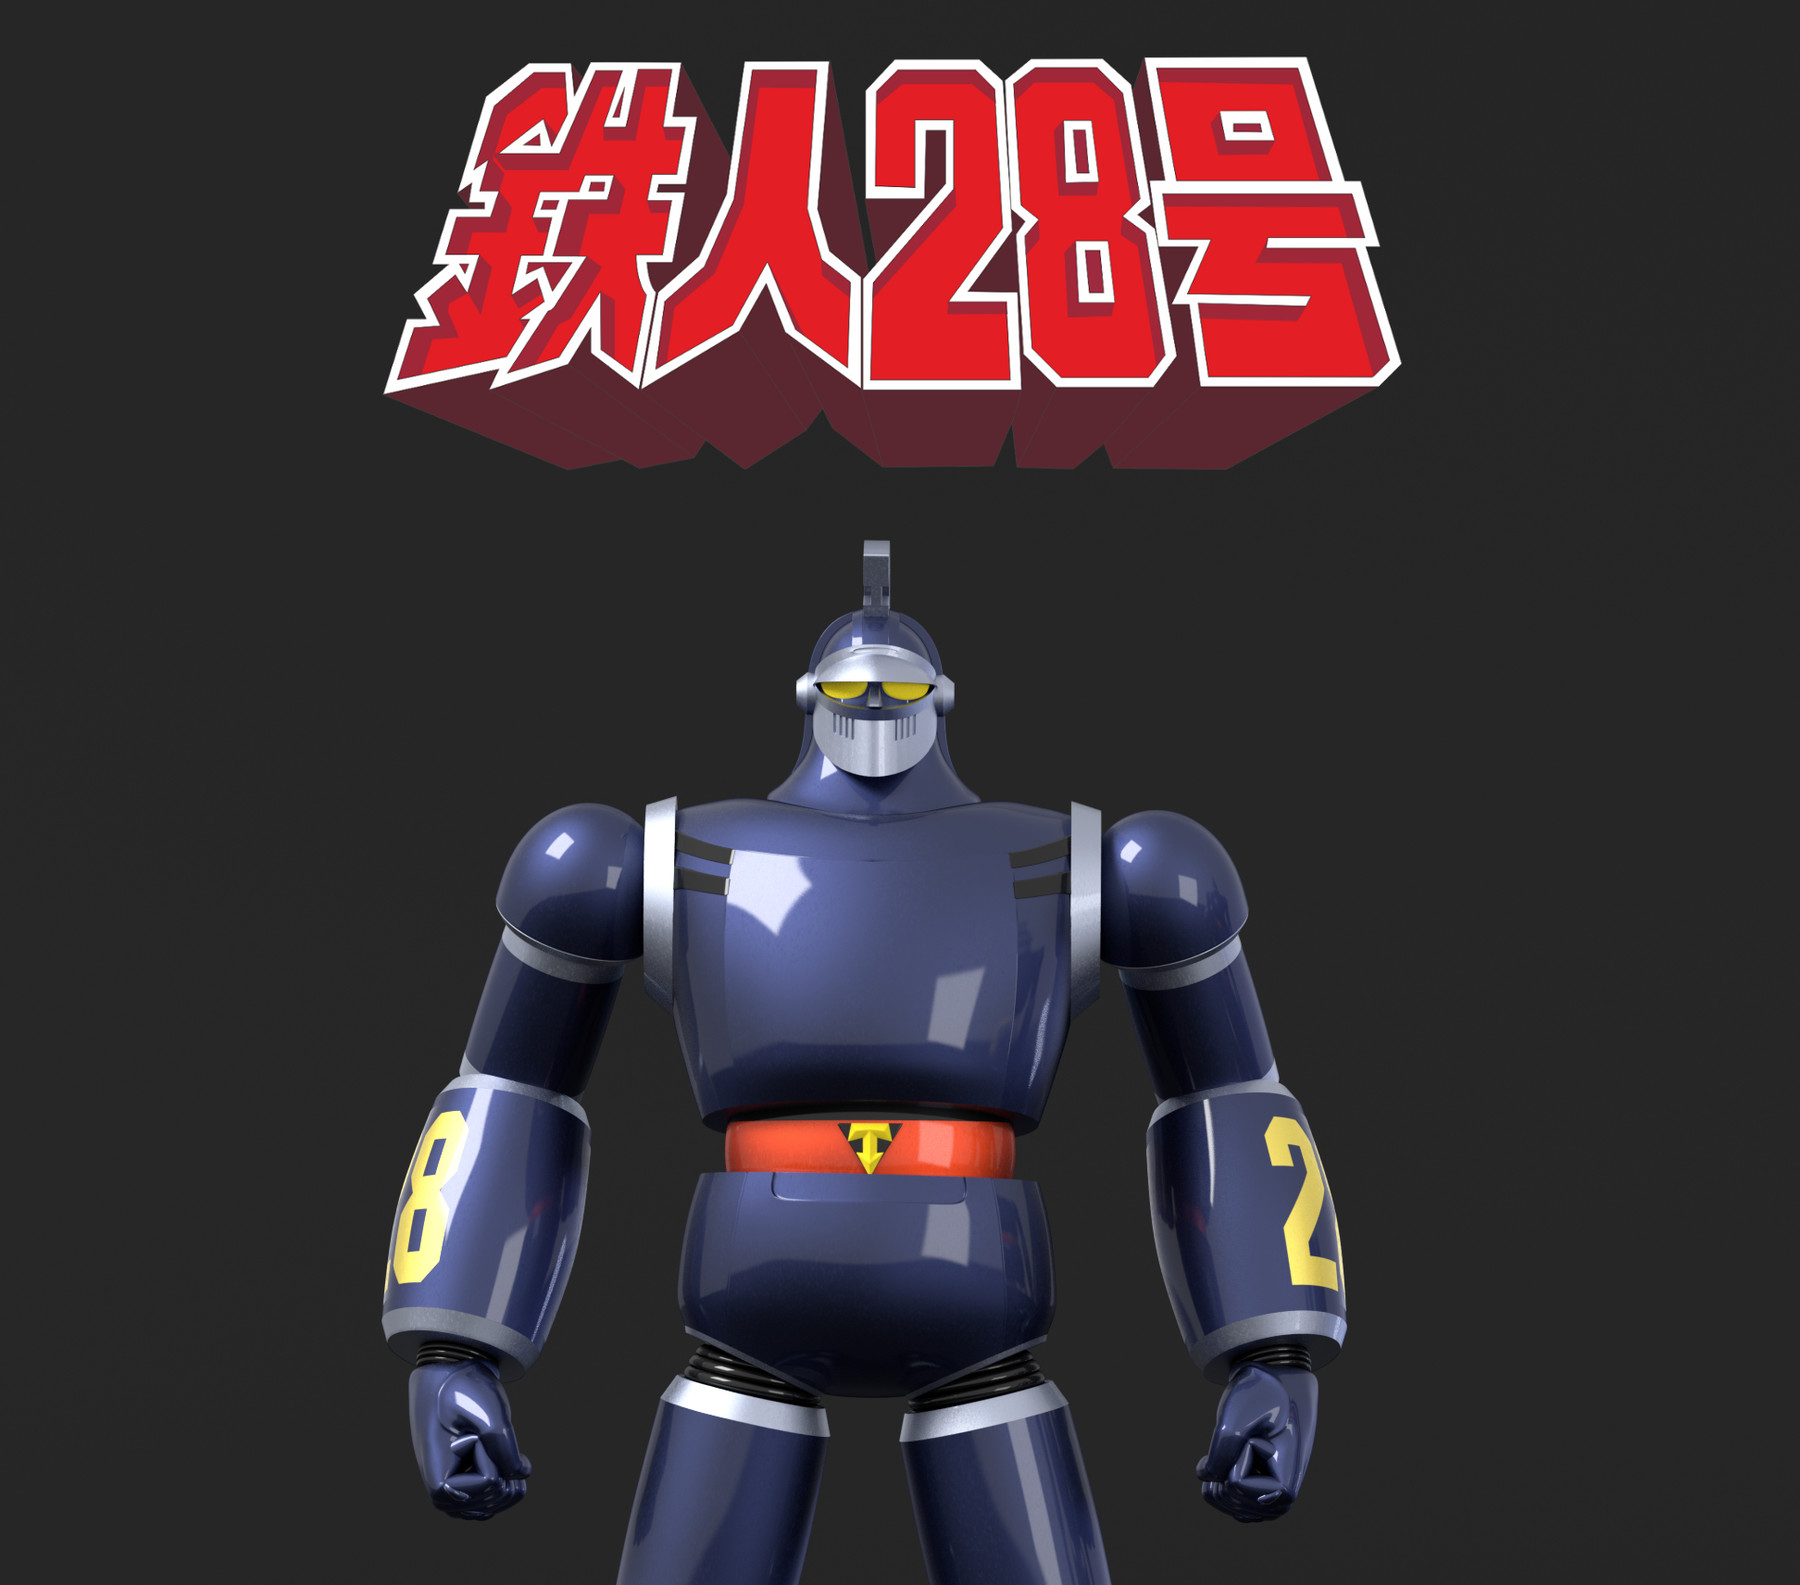 J C. ] - 鉄人28号 - Tetsujin 28-go - IronMan 28